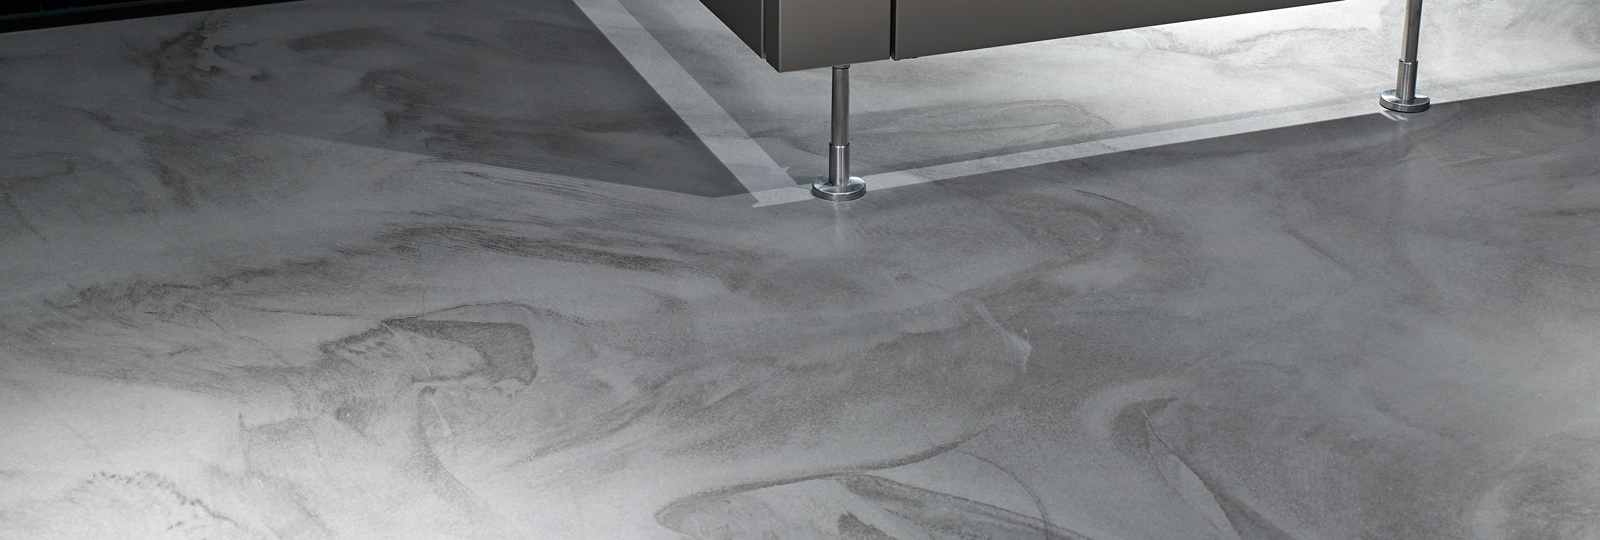 Mineral plaster floor